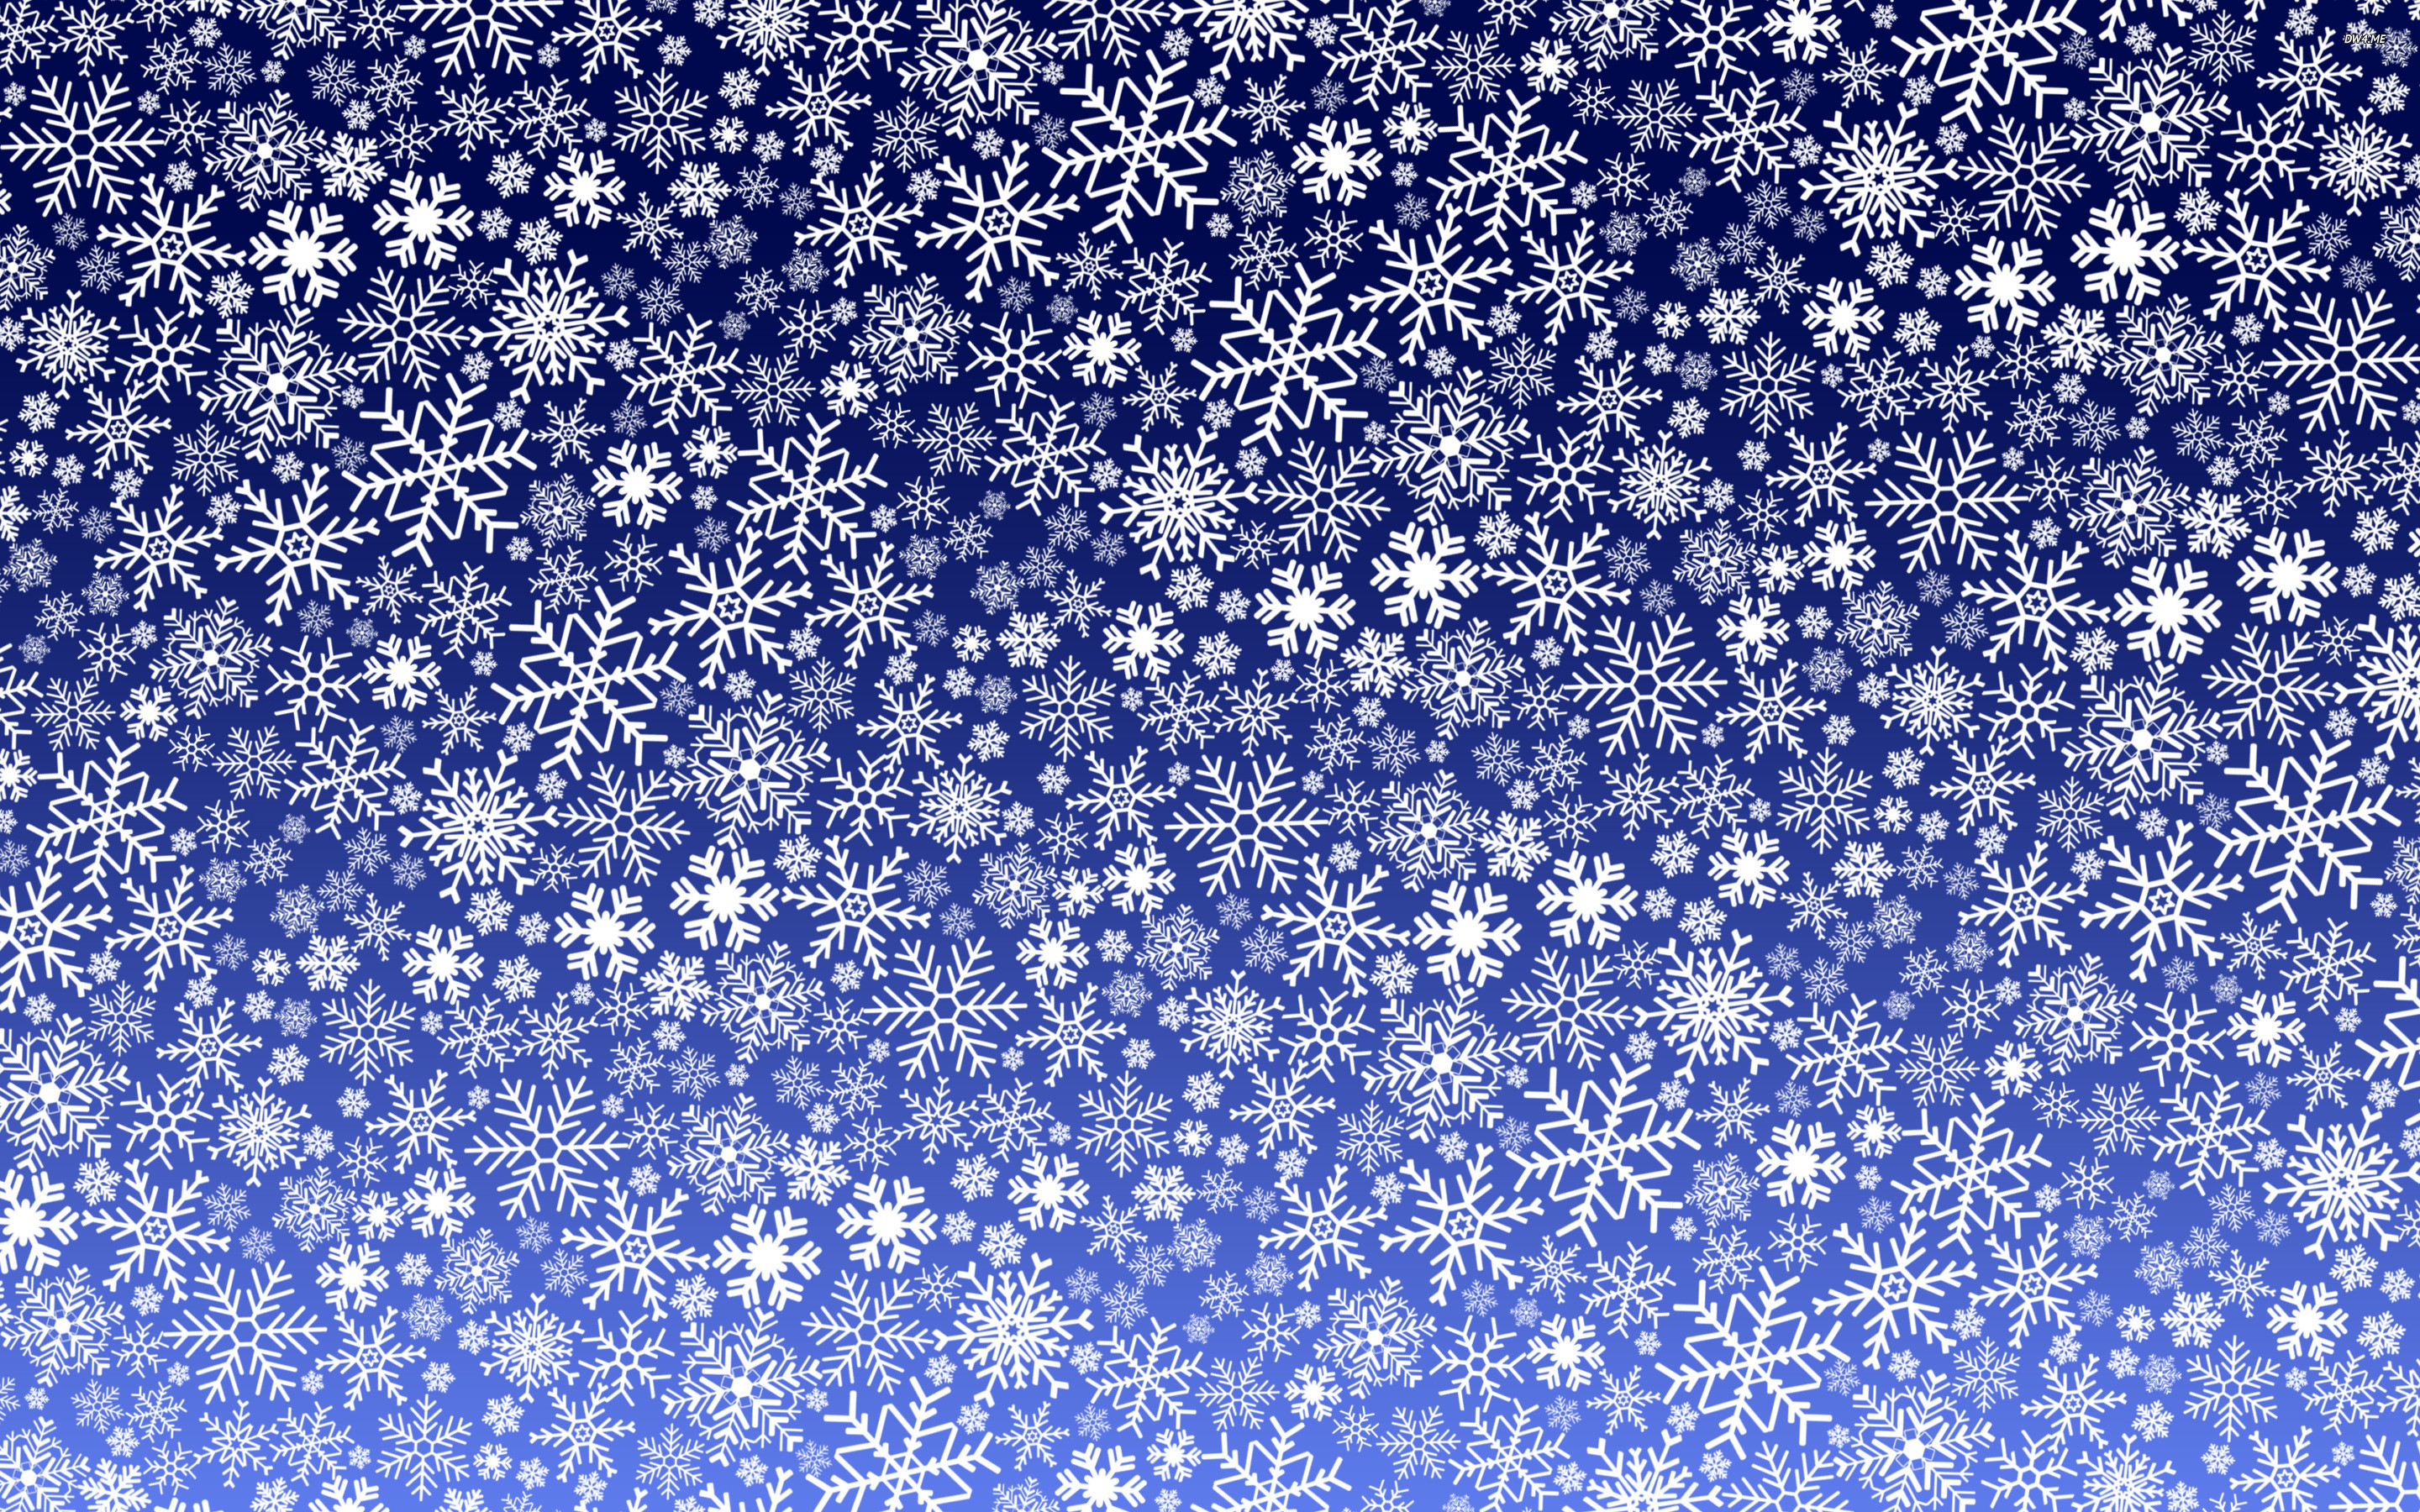 2880x1800 Snowflake wallpaper hd wallpapers.